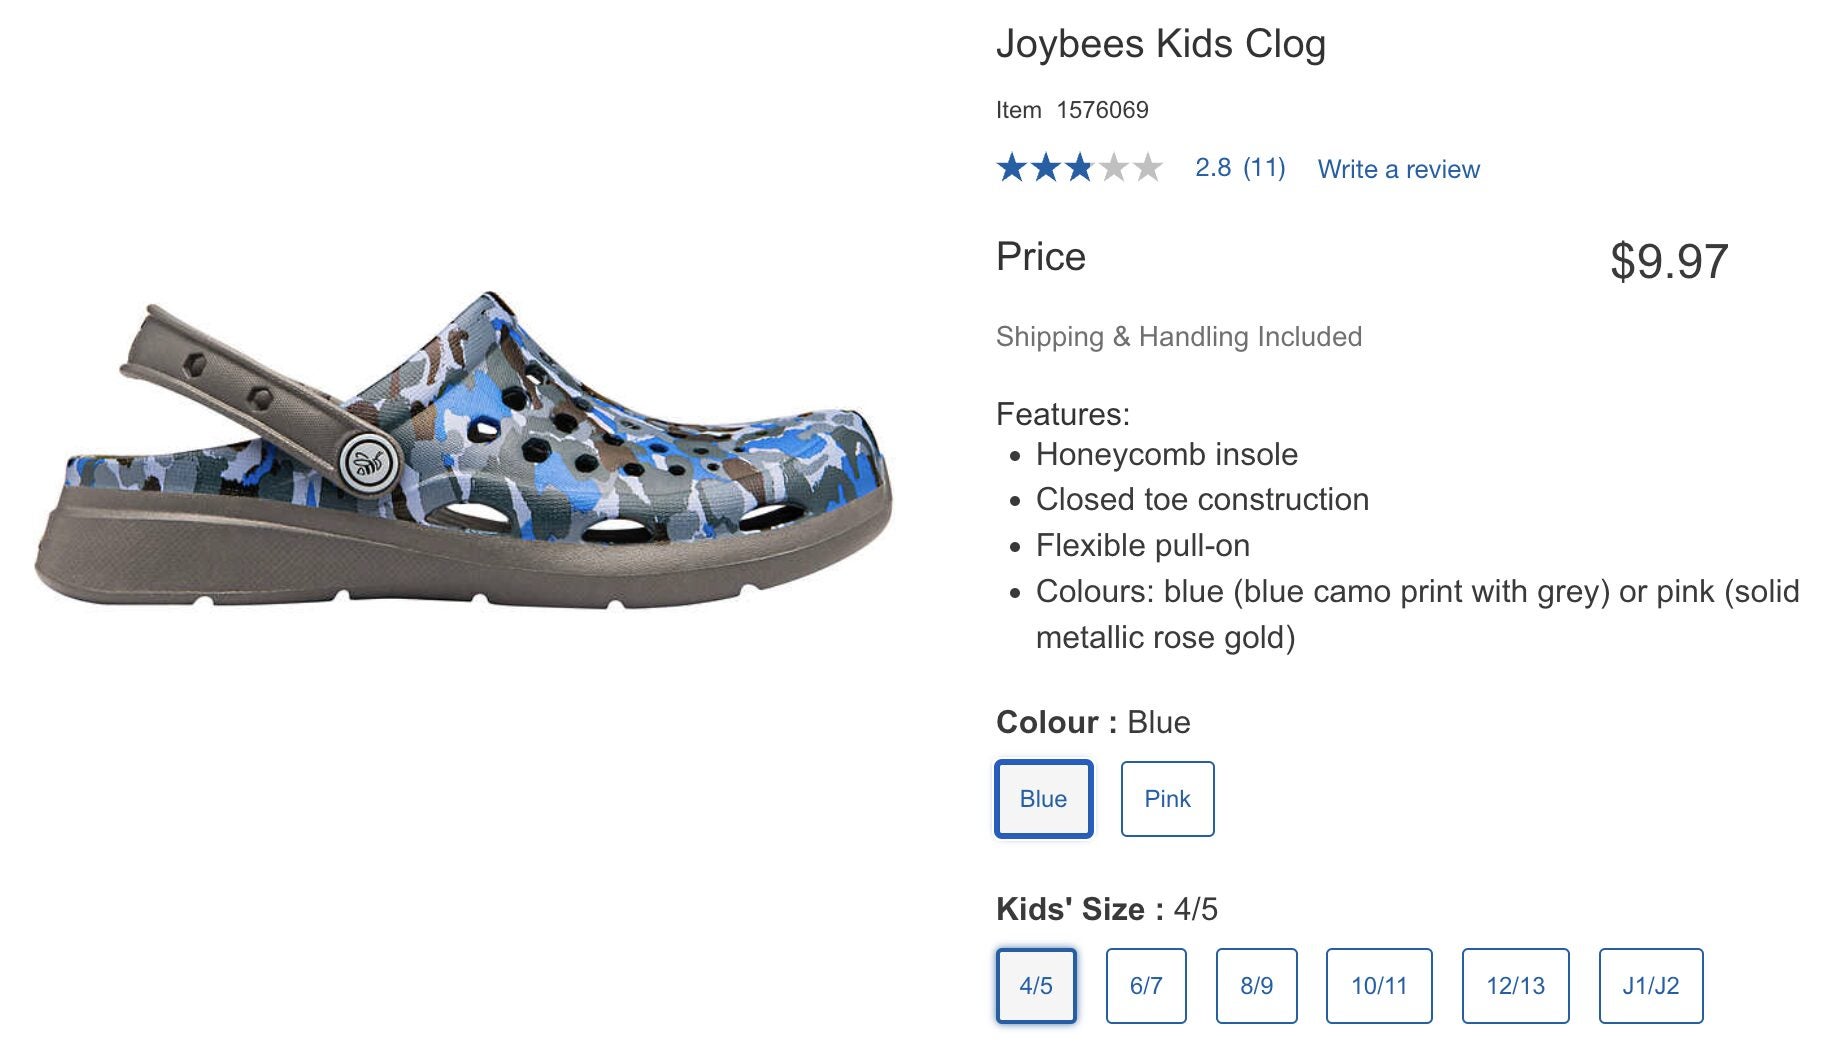 [Costco] Joybees Kids Clog - $9.97 (ATL) - RedFlagDeals.com Forums